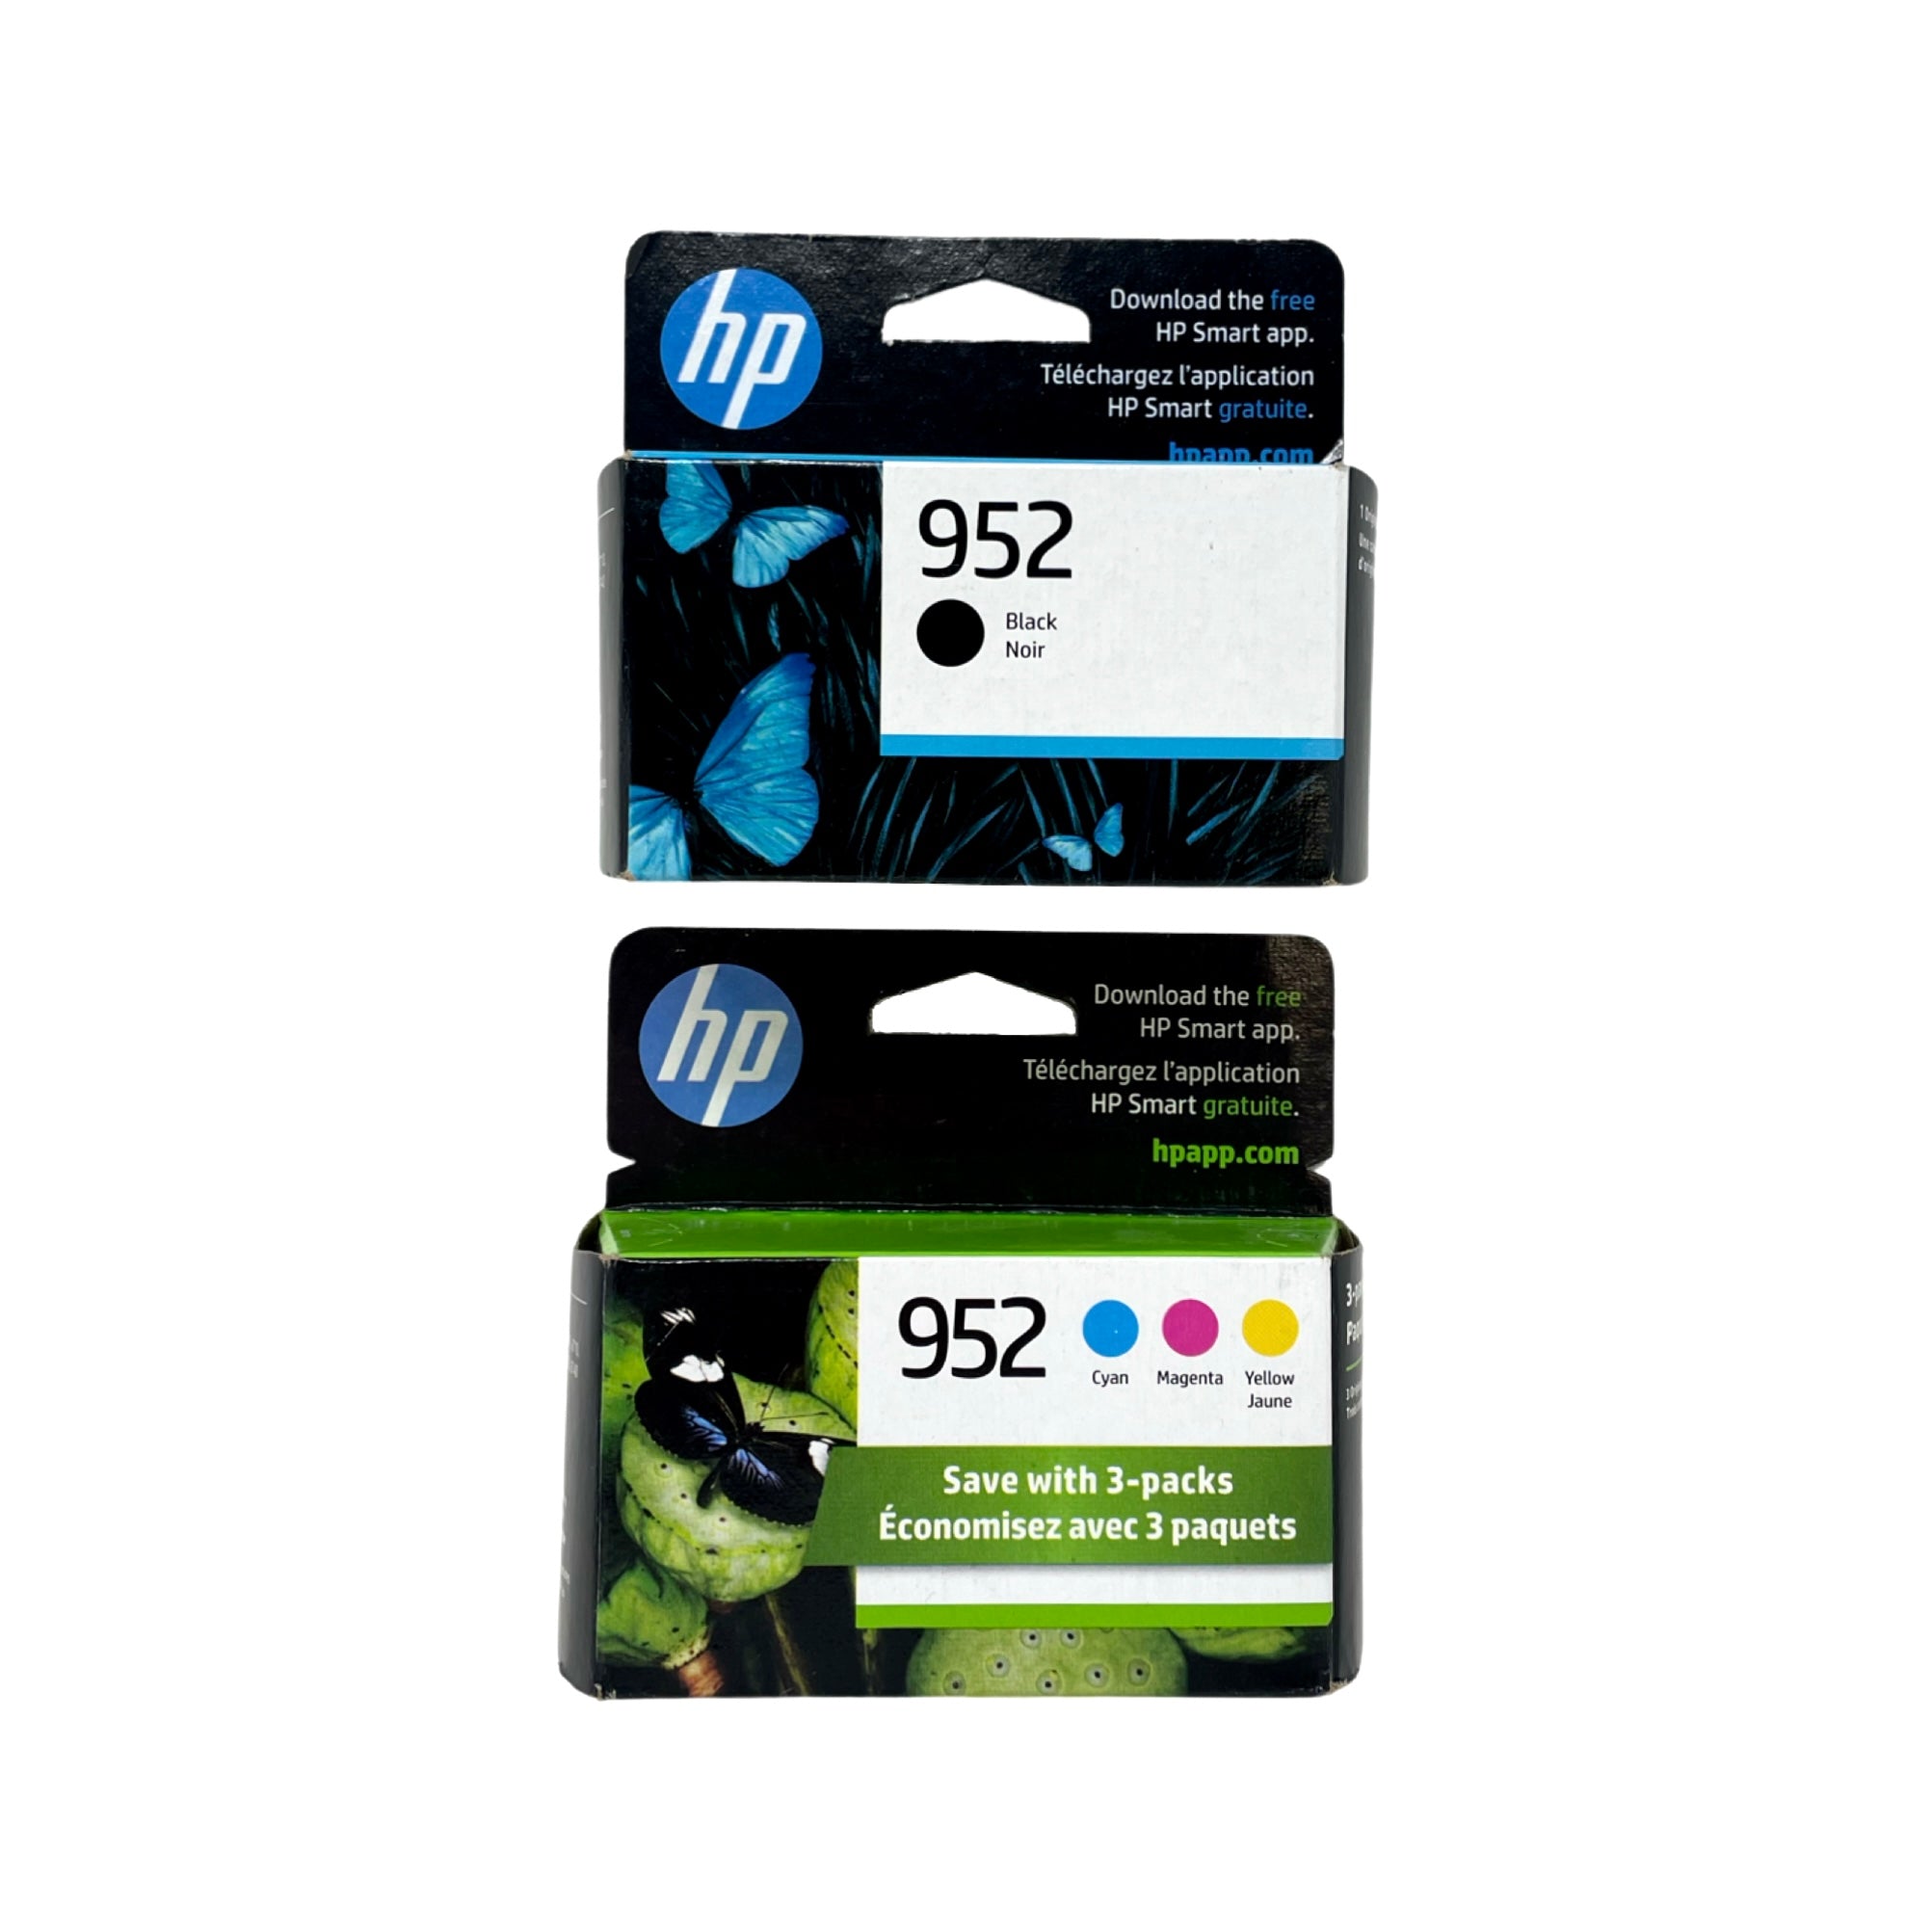 HP 952 Ink 4 pack - Black Cyan Magenta Yellow - Original HP Ink Cartridges (X4E07AN